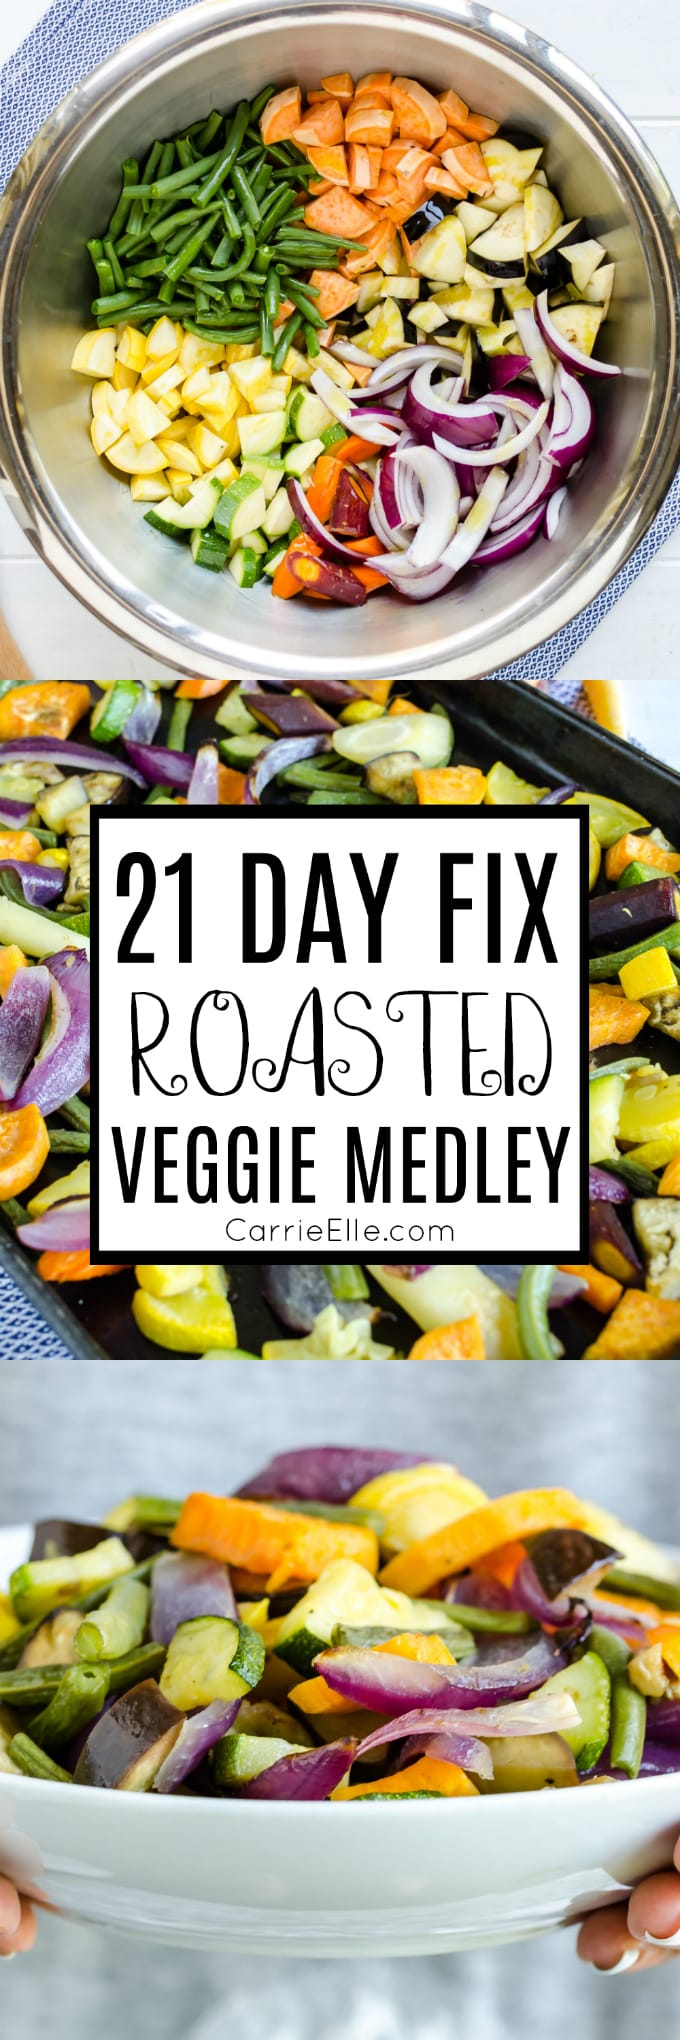 21 Day Fix Roasted Veggie Medley